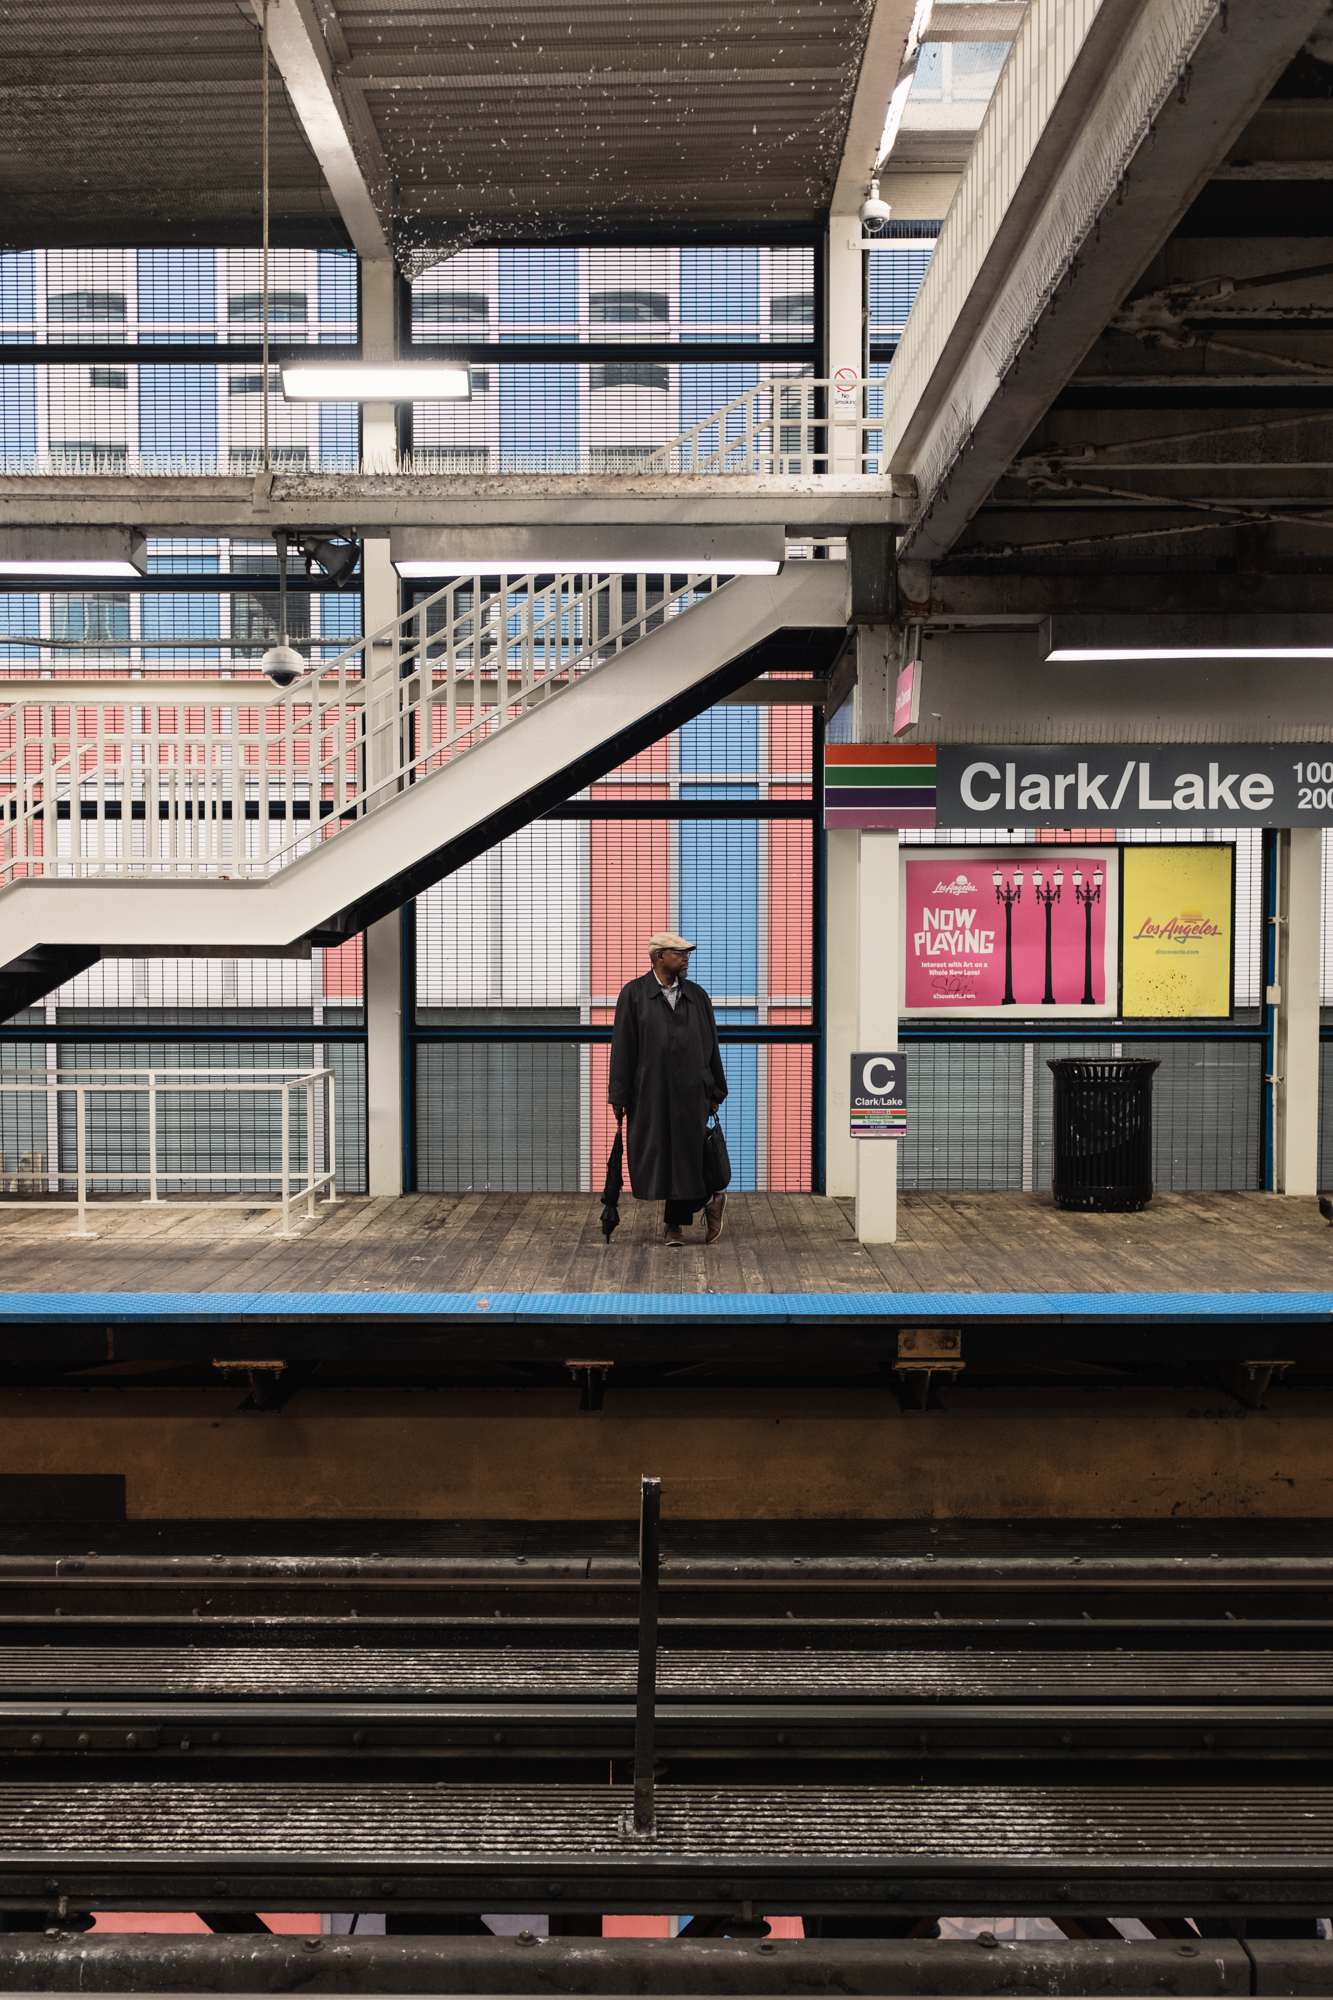 Clark/Lake L Station